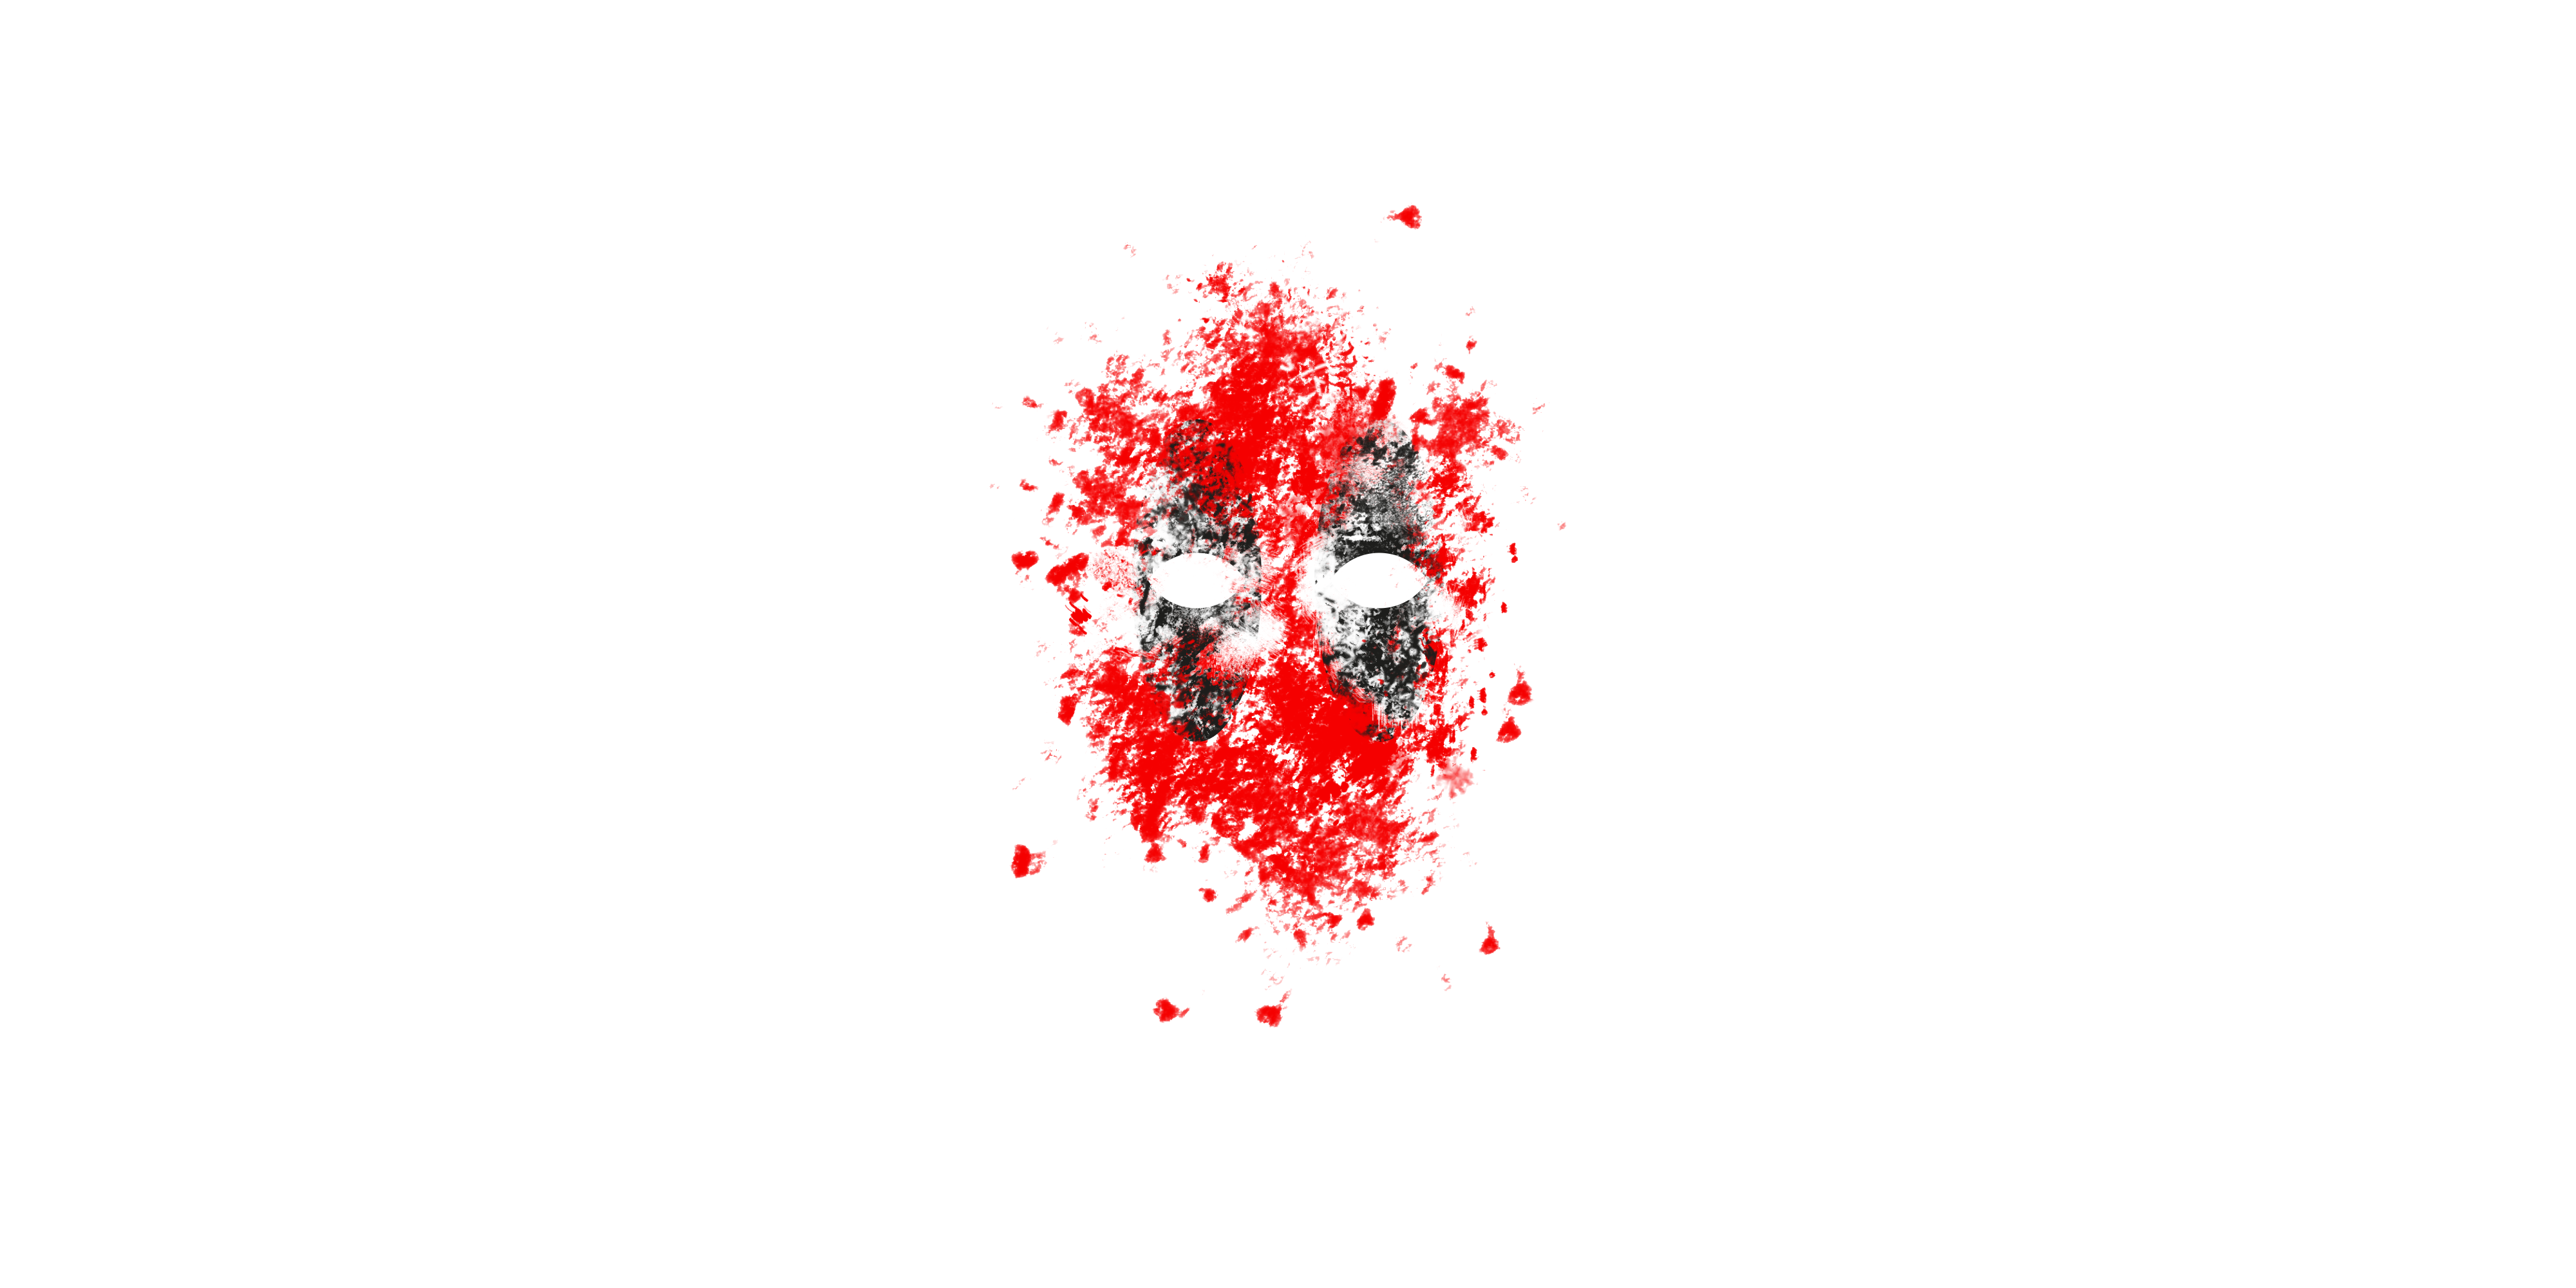 General 4000x2000 Deadpool Marvel Comics red minimalism splashes digital art simple background